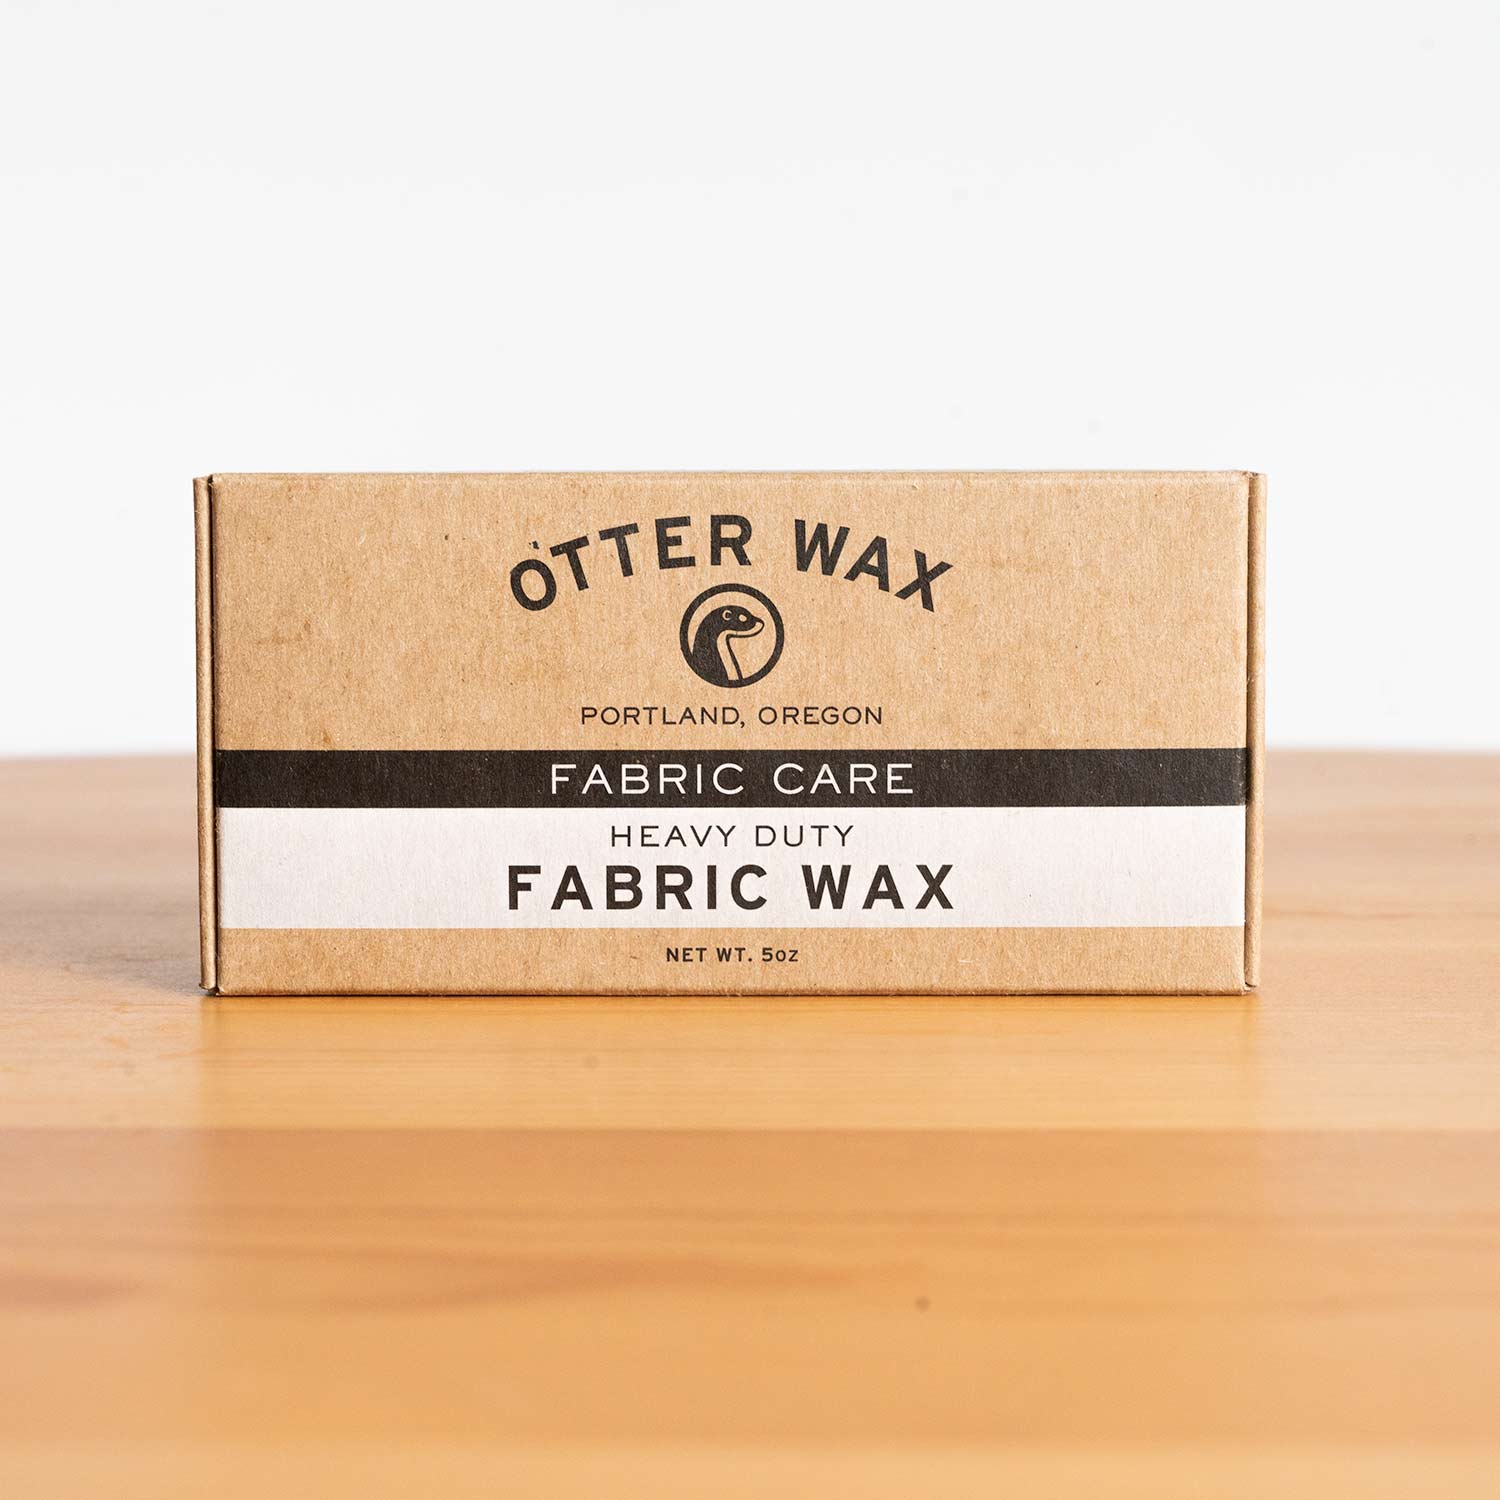 Heavy duty fabric wax - Regular